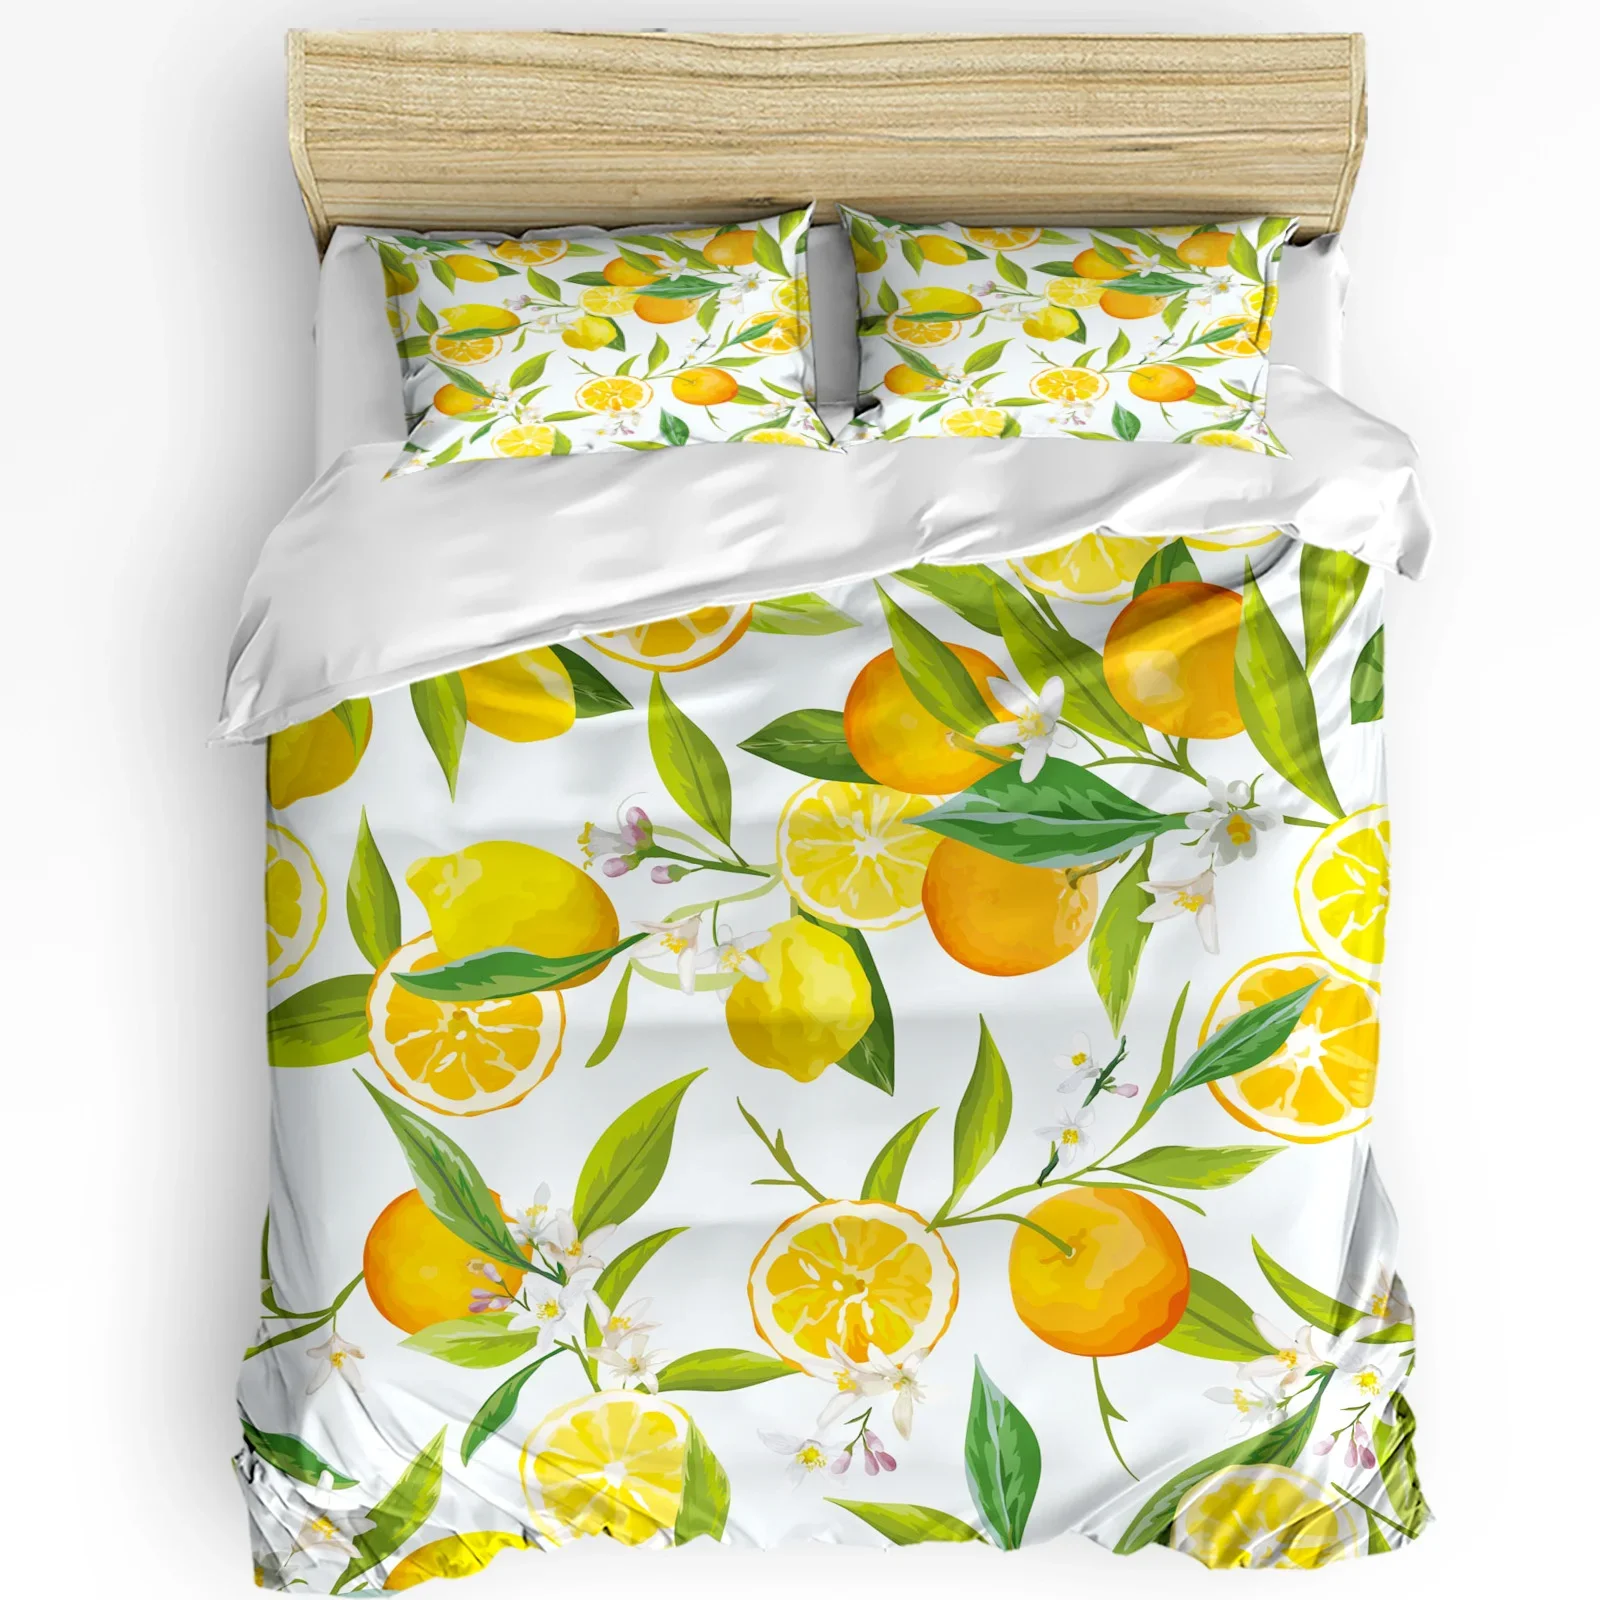 

Lemon Flower Leaf Fruit Printed Comfort Duvet Cover Pillow Case Home Textile Quilt Cover Boy Kid Teen Girl 3pcs Bedding Set